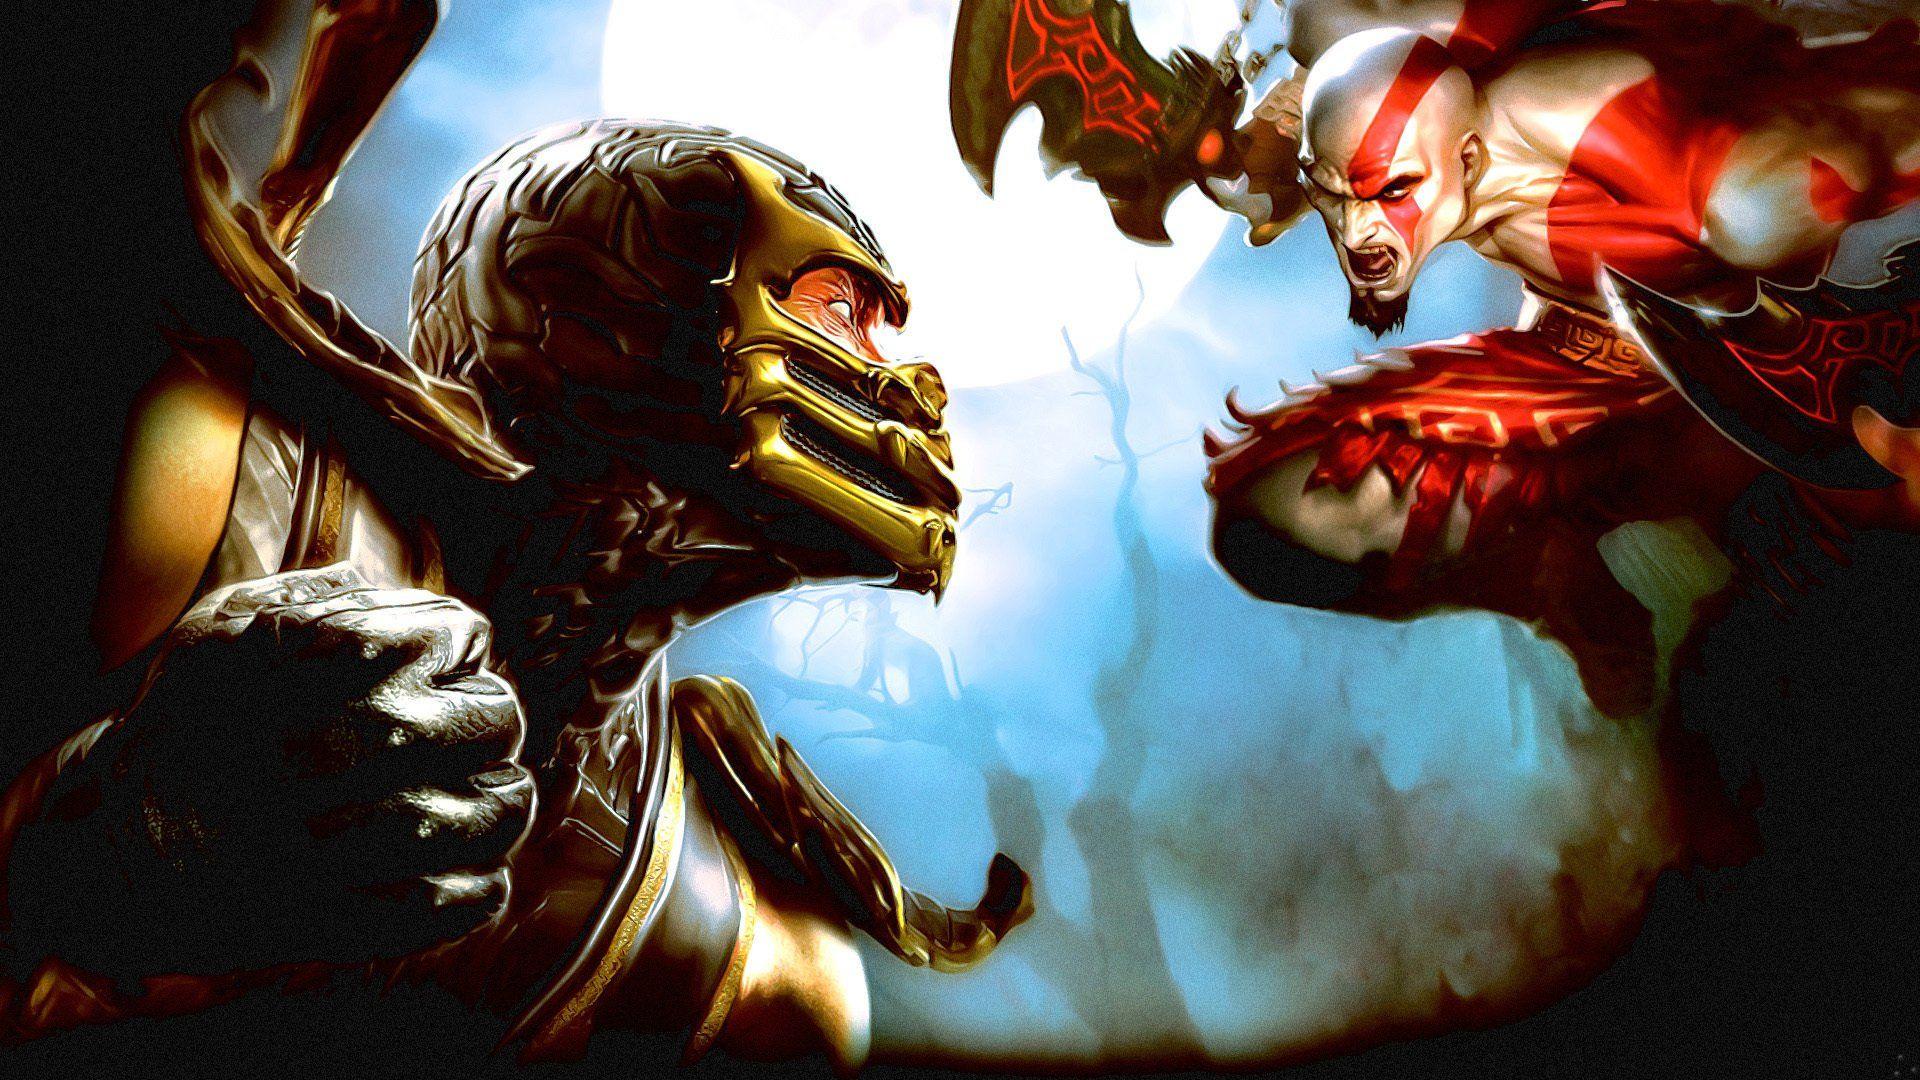 Mortal Kombat 9 Wallpaper, Cool Mortal Kombat 9 Background